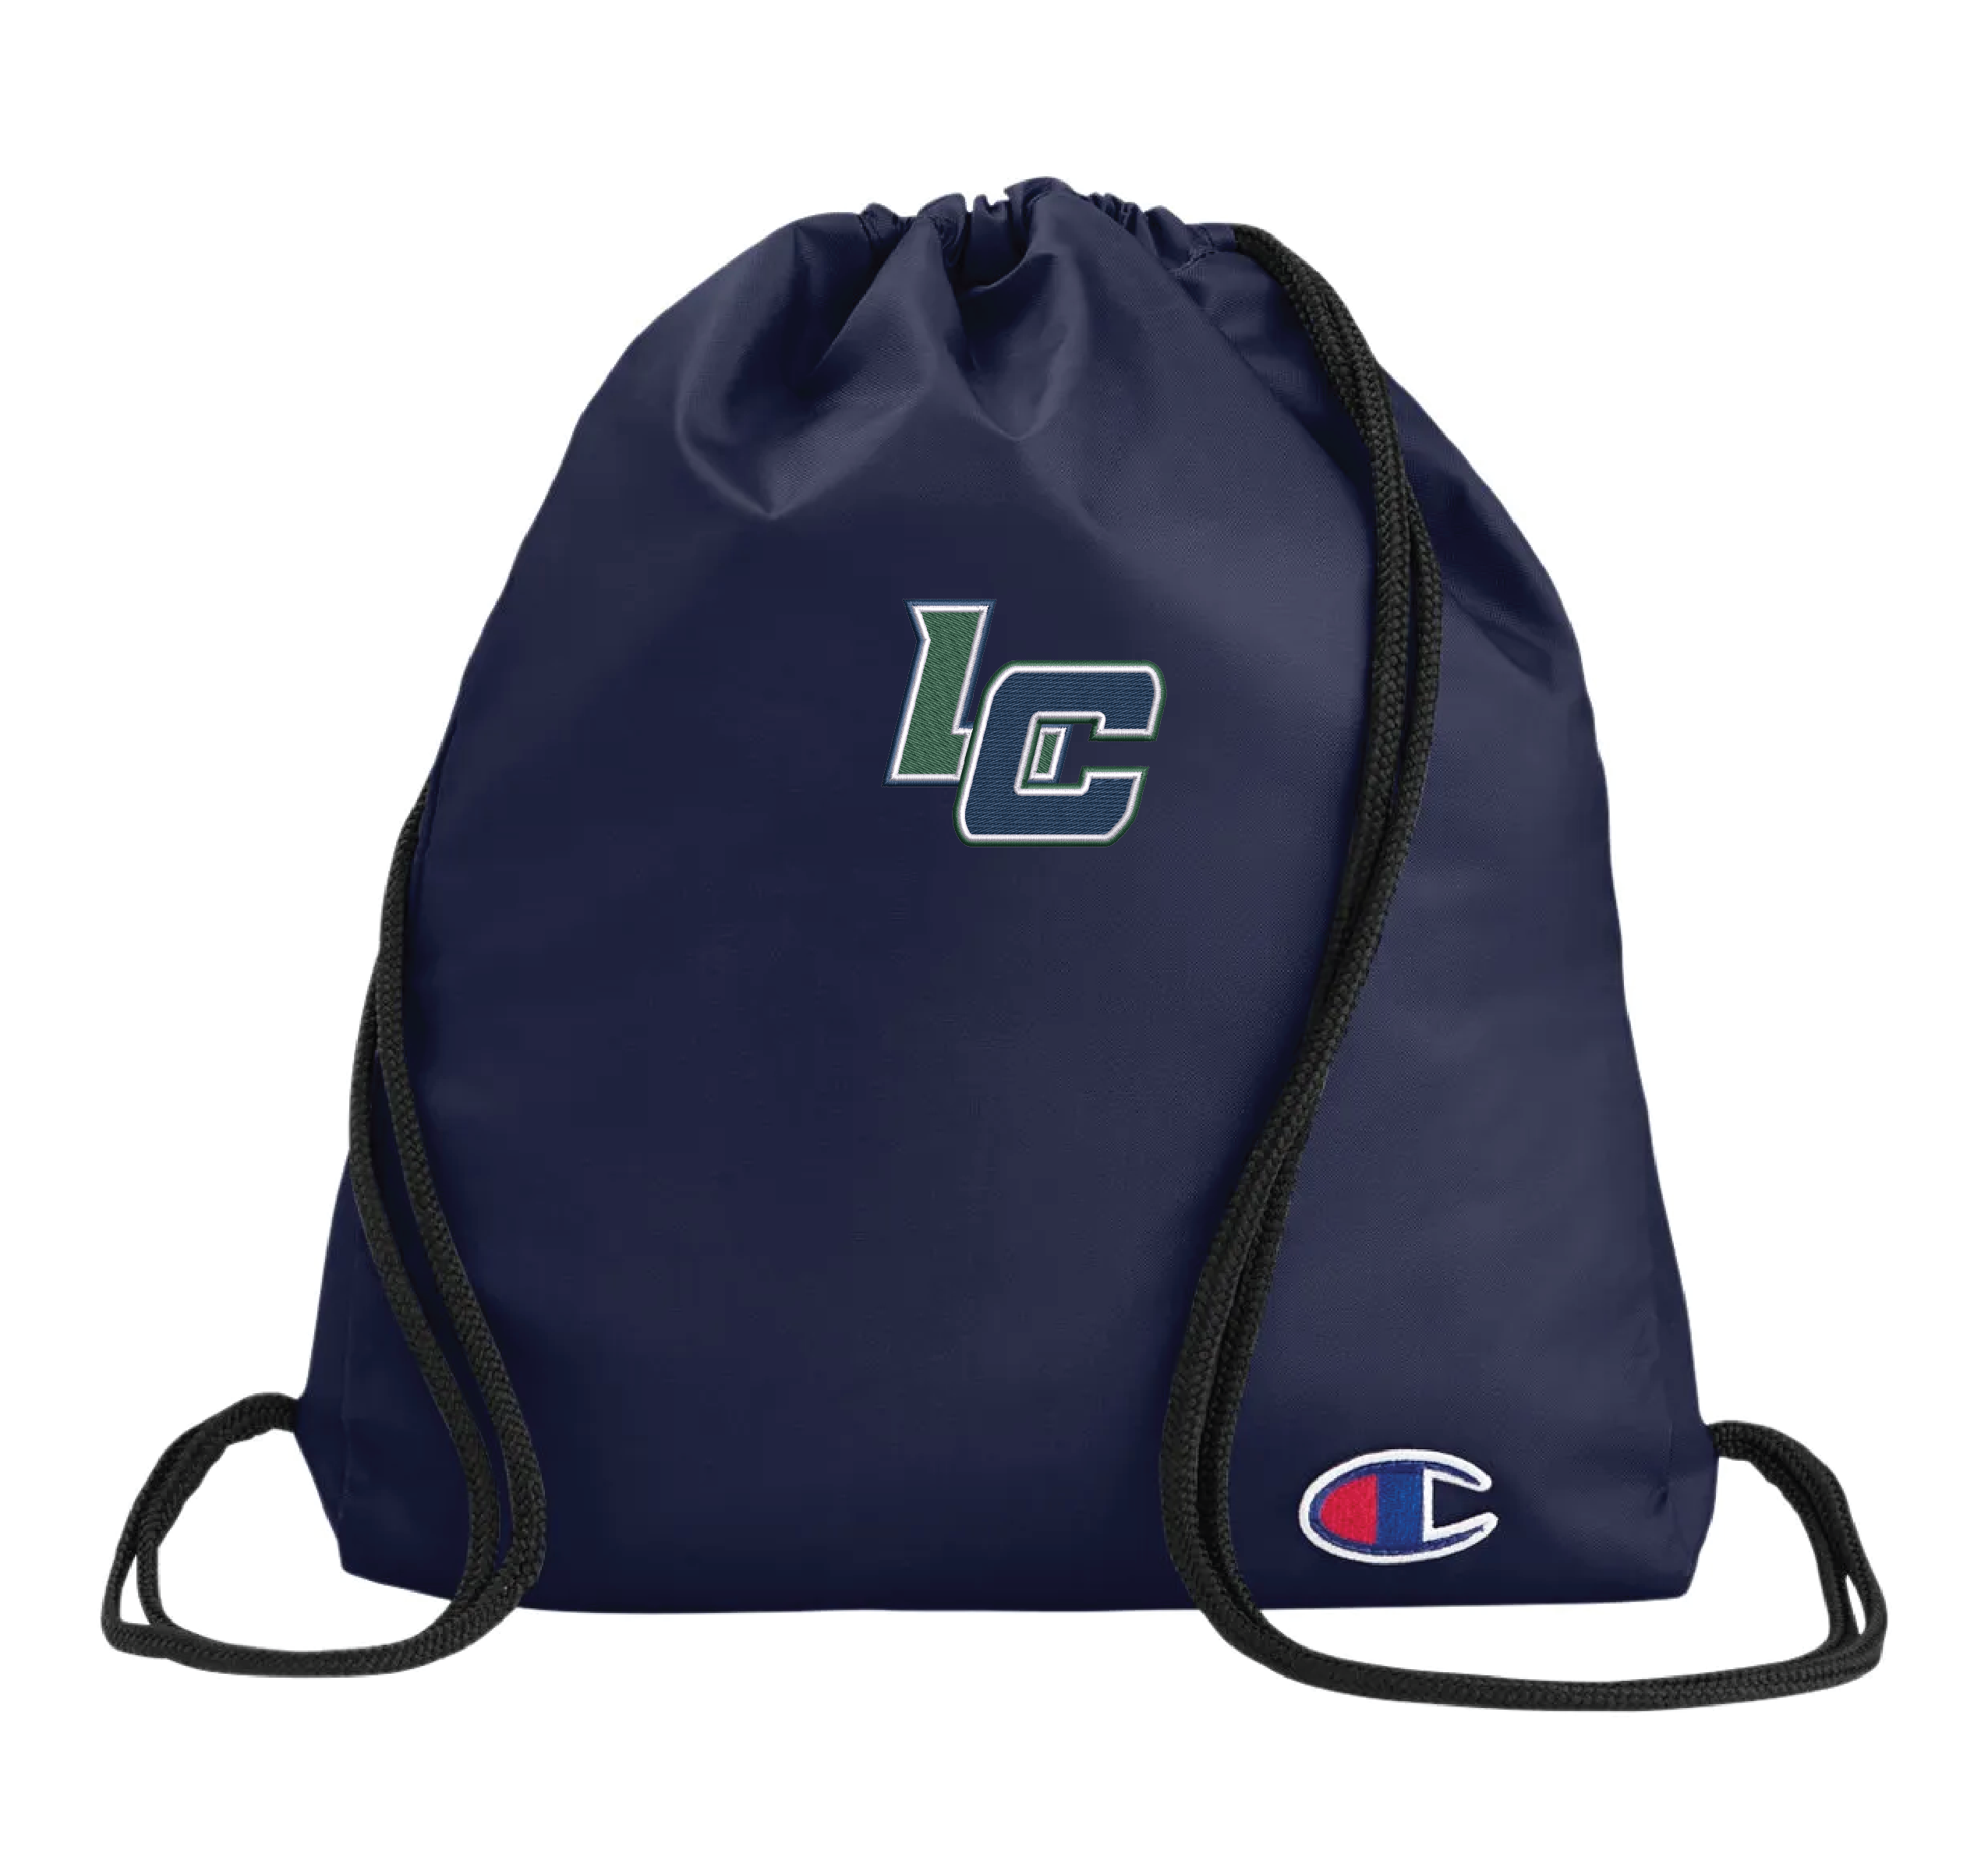 LC Champion Drawstring Bag